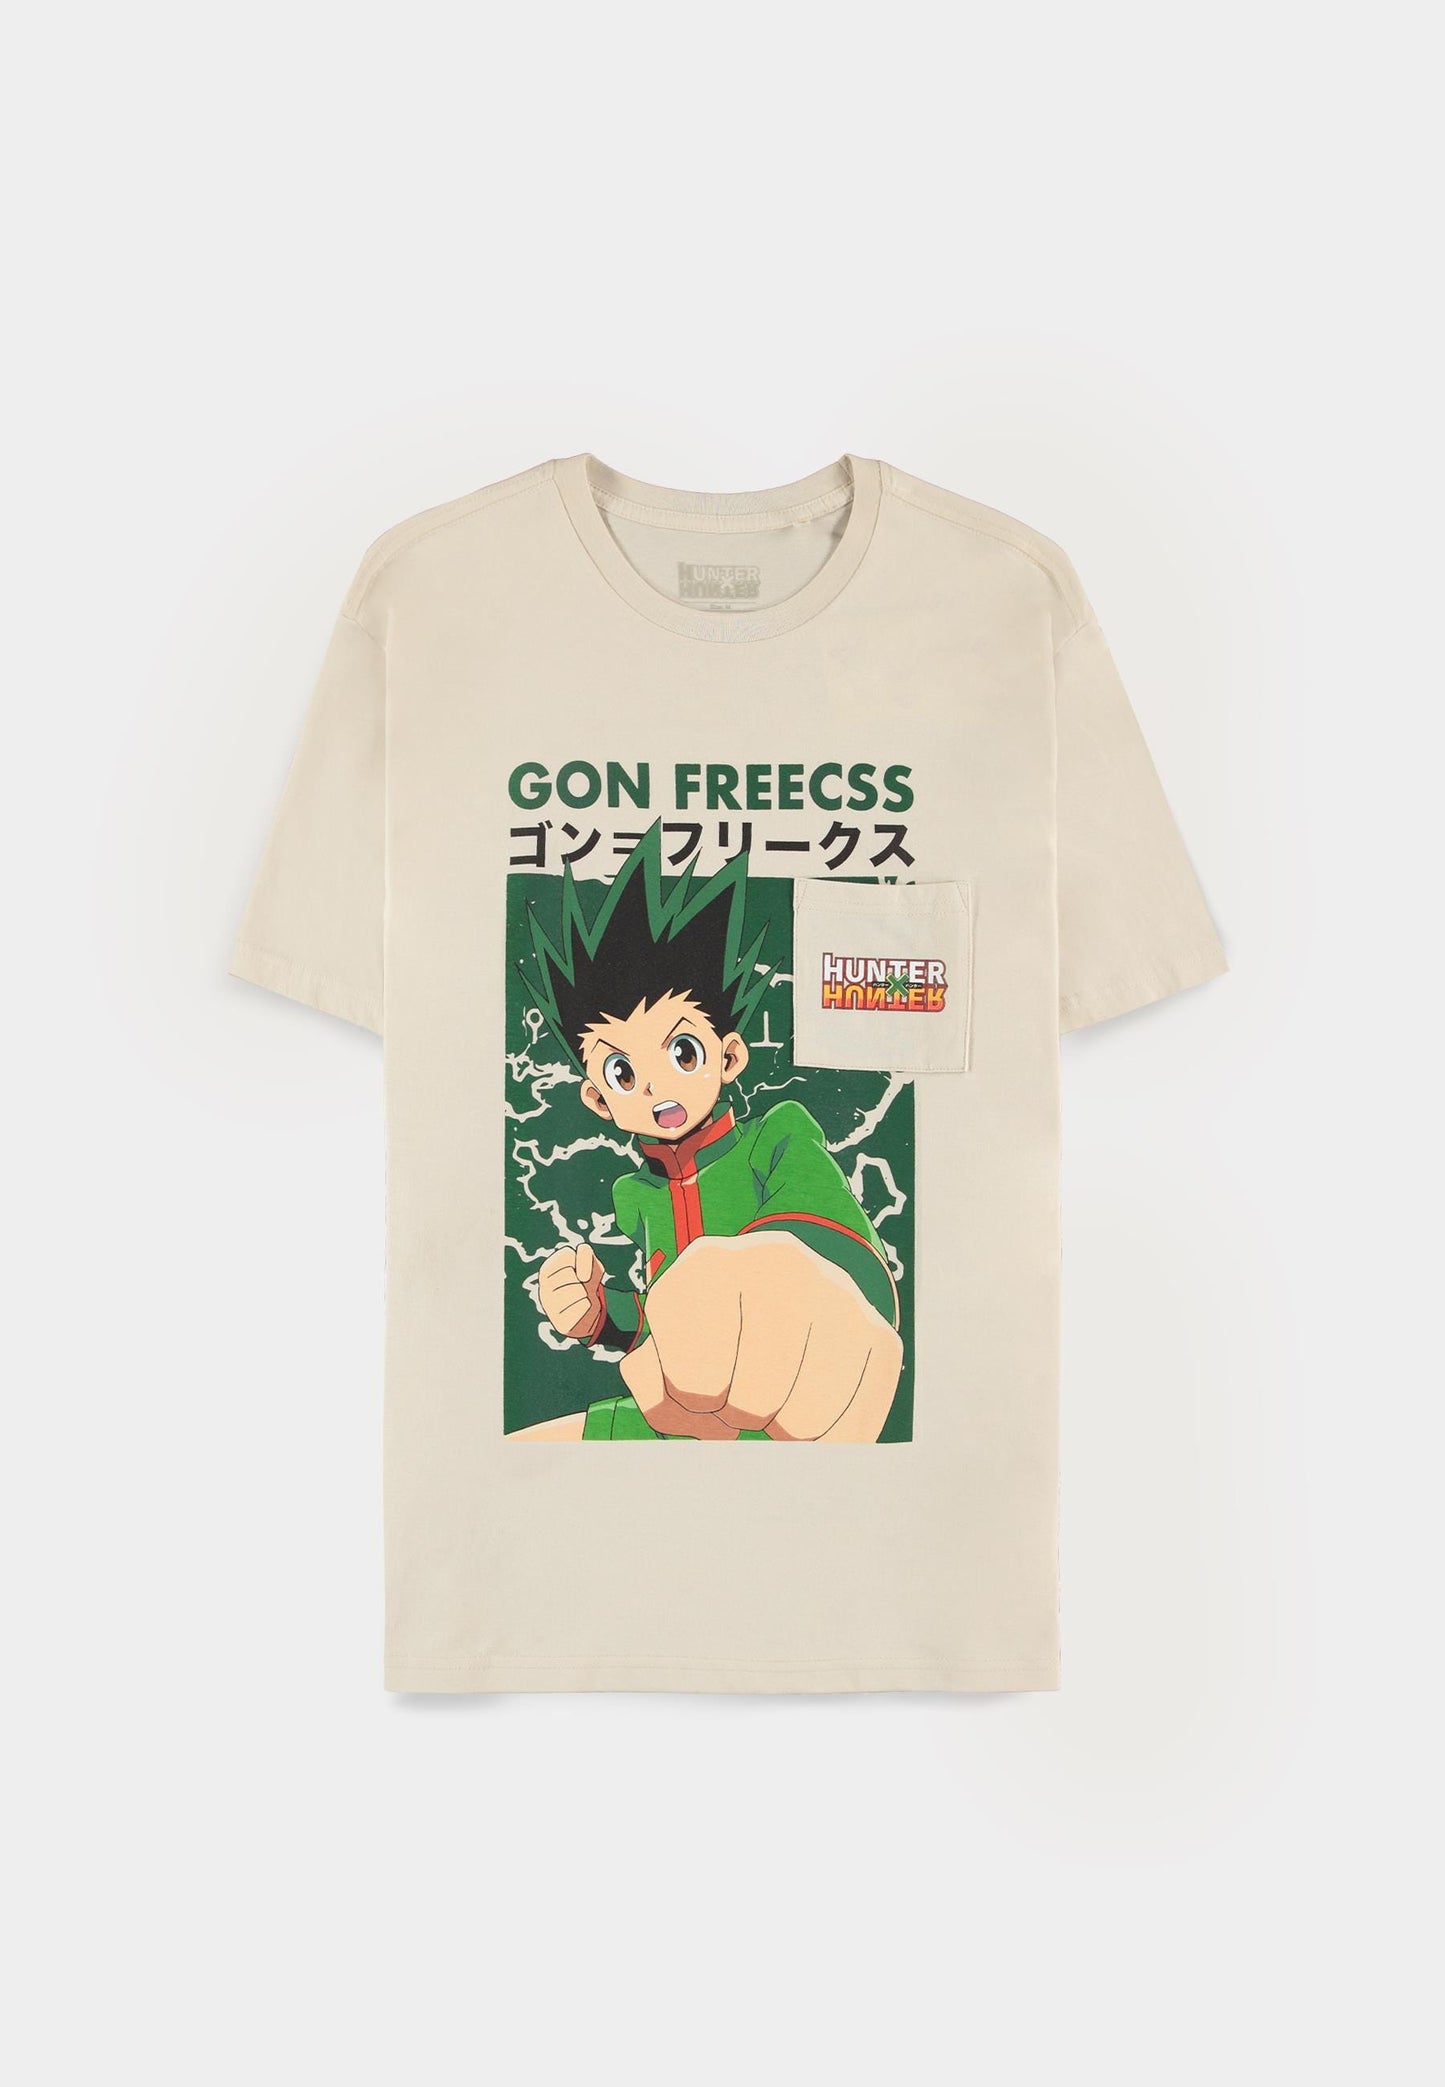 Hunter X Hunter - Gon Freecss - Men's Loose Fit Short Sleeved T-shirt